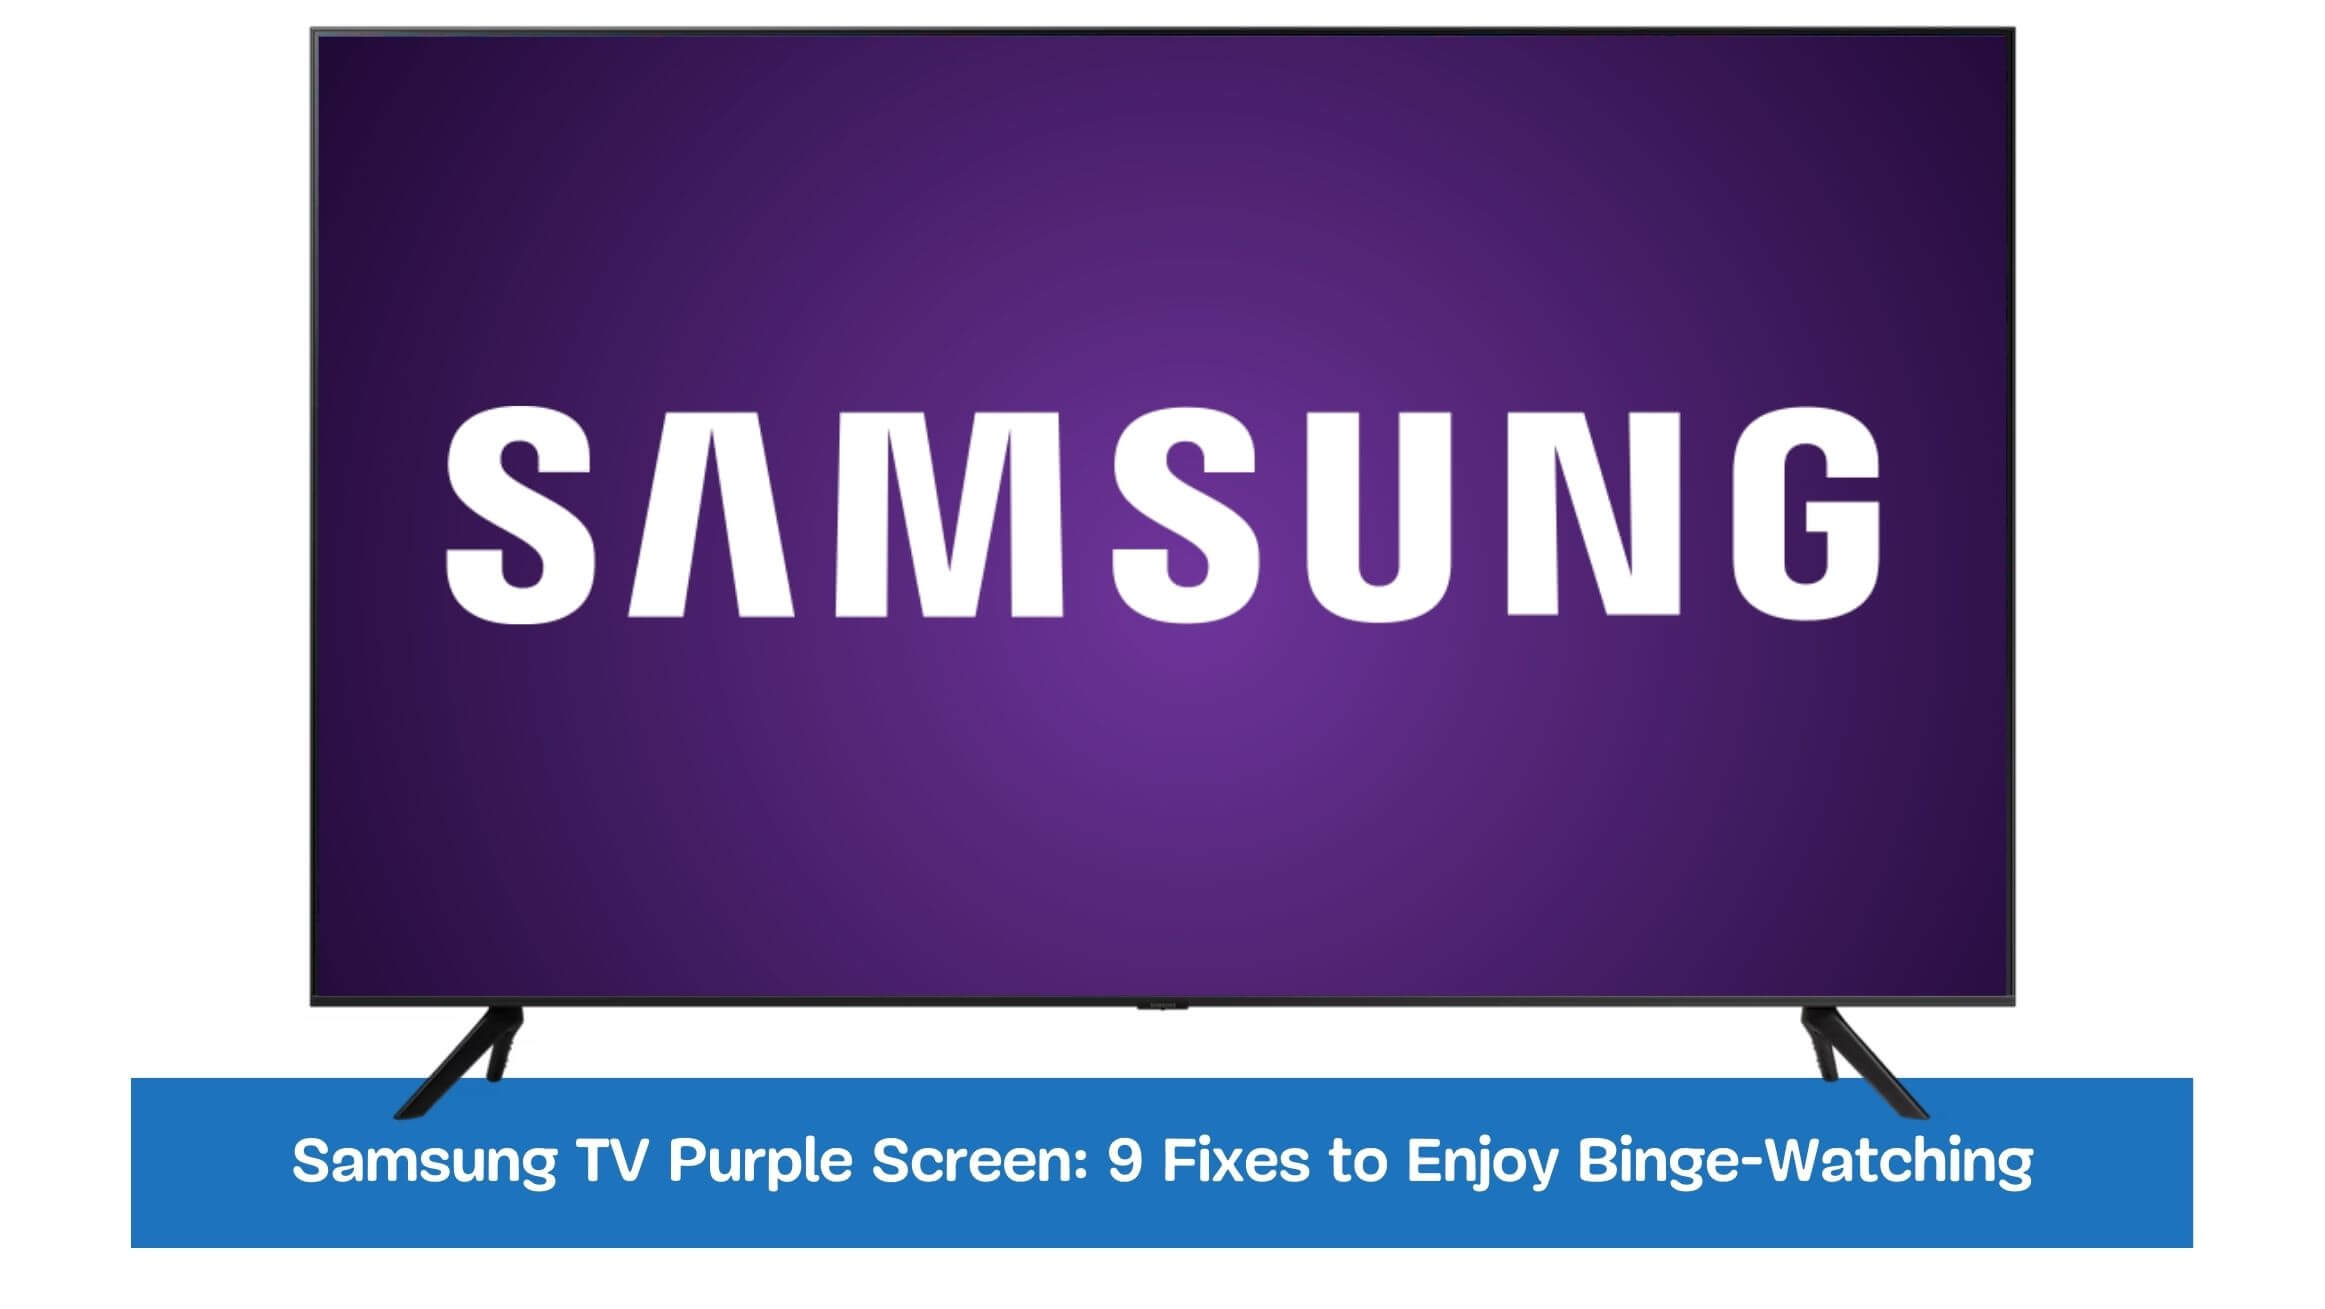 Samsung TV Purple Screen: 9 Fixes to Enjoy Binge-Watching